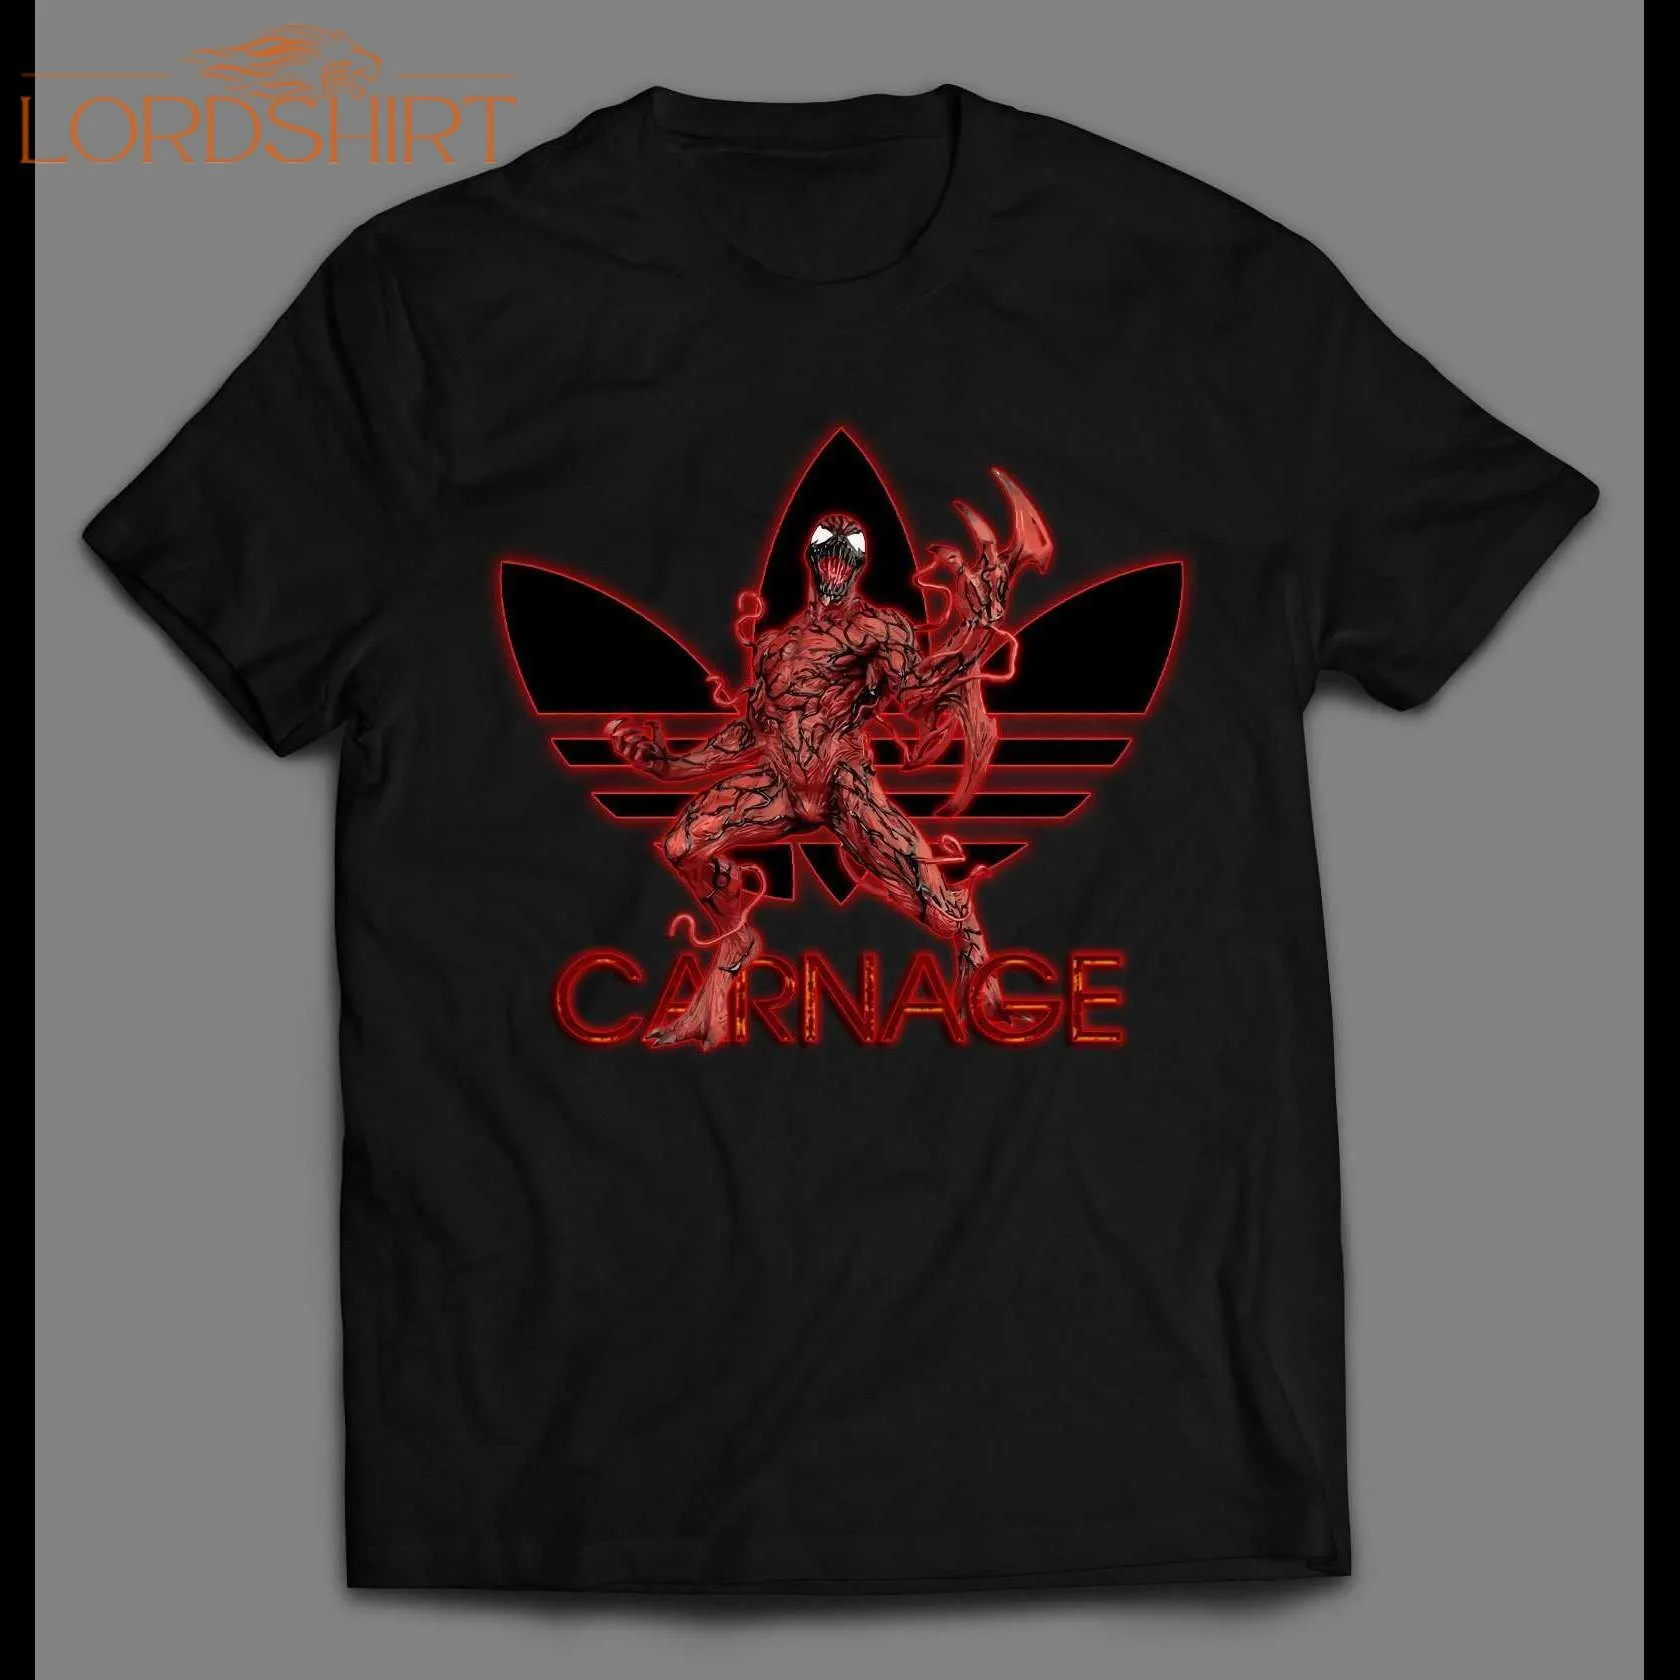 Symbiote Carnage Sports Wear Parody Comic Art Shirt